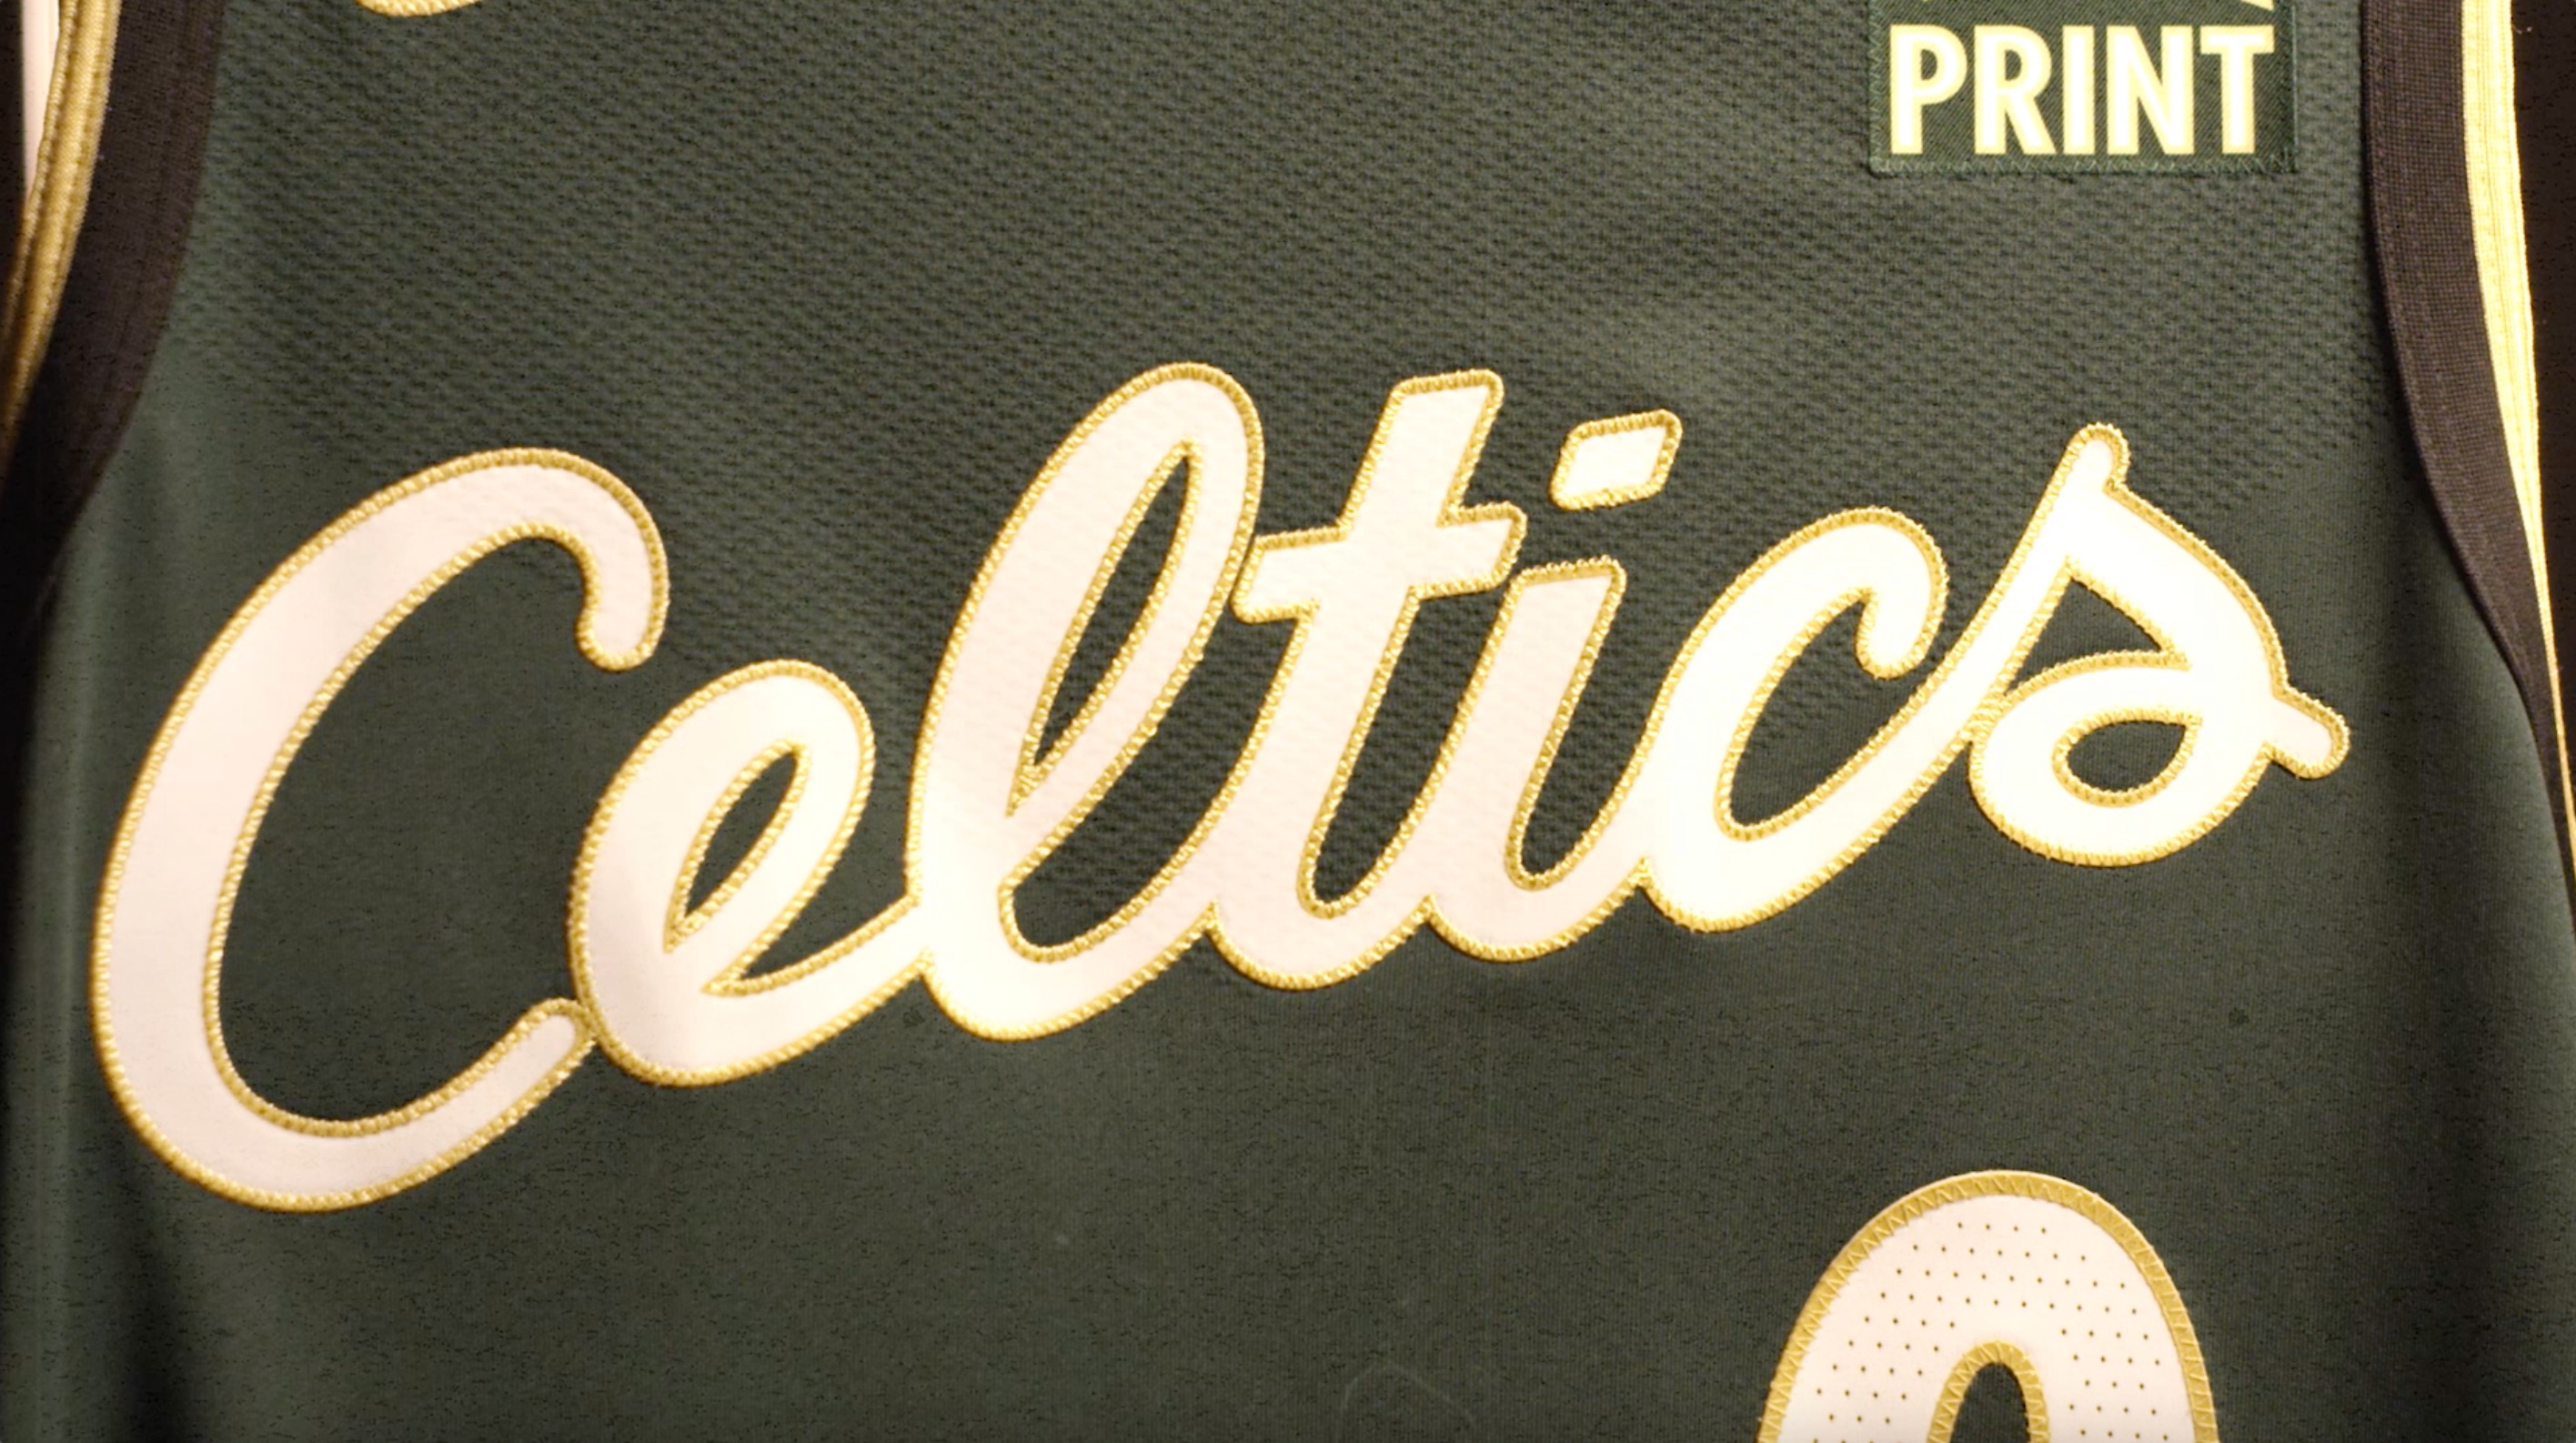 celtics jersey city edition